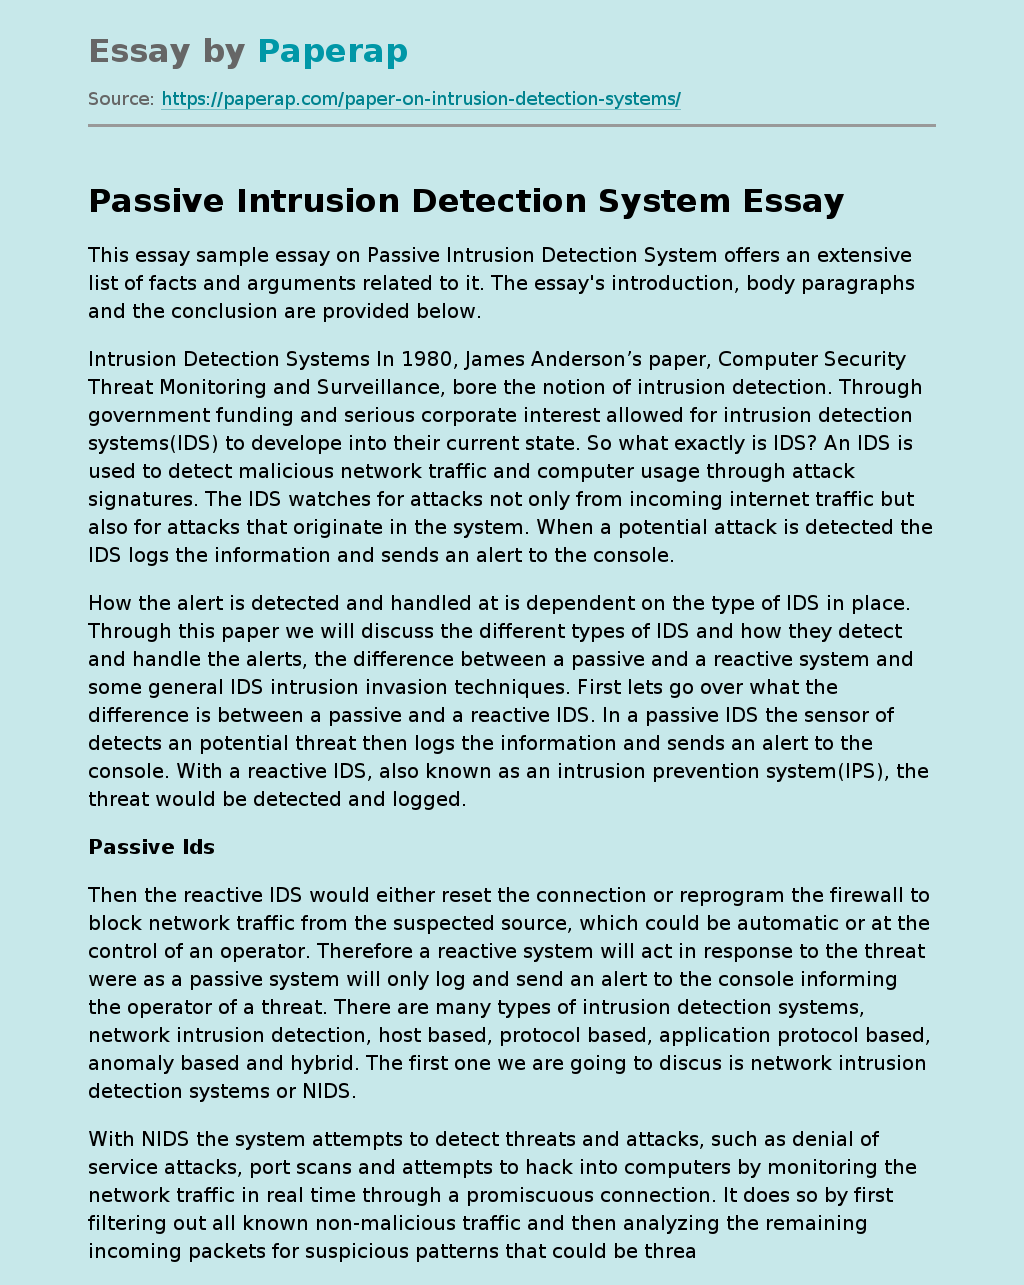 Passive Intrusion Detection System